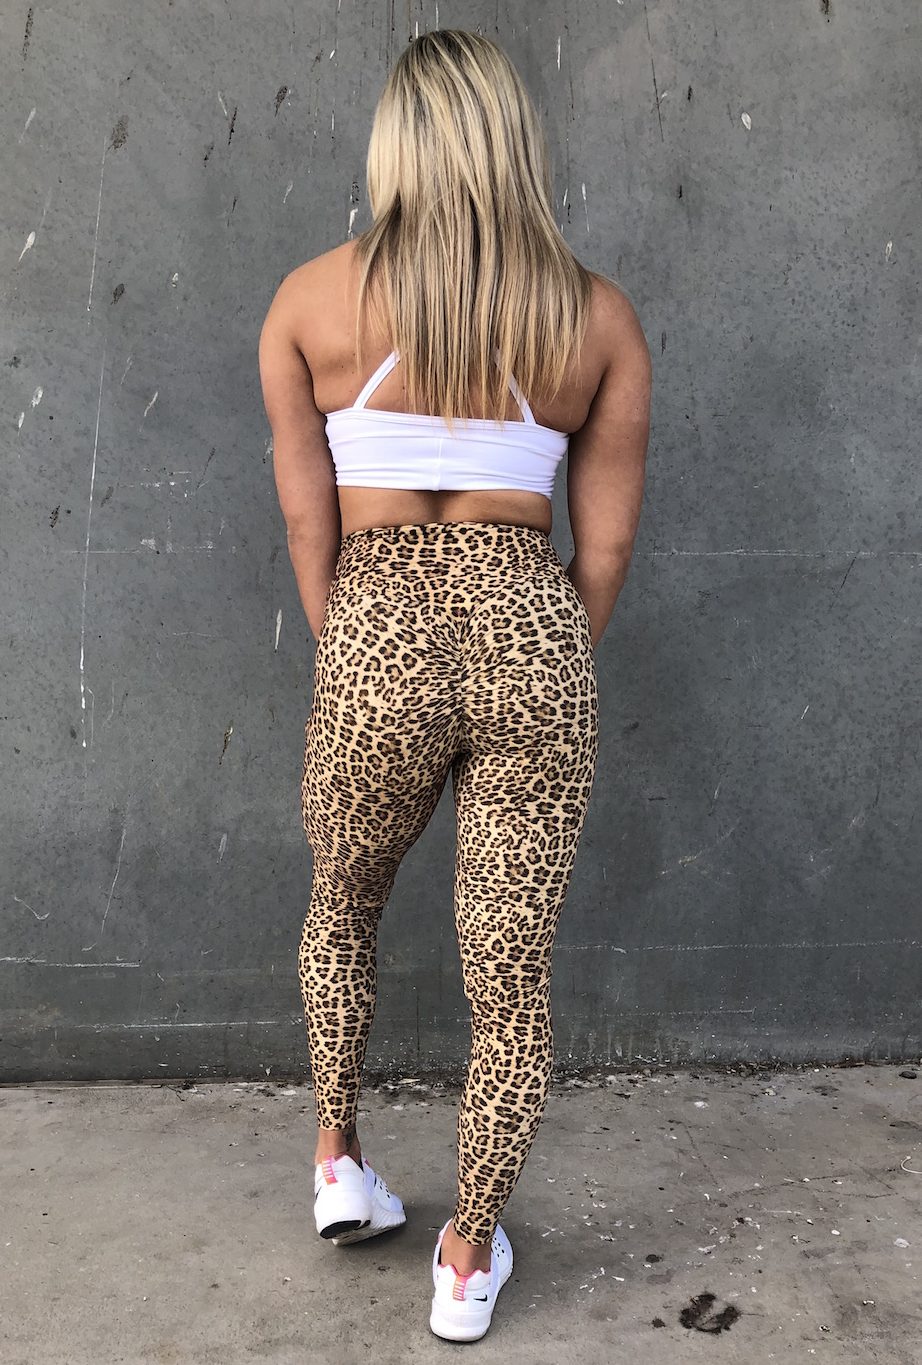 Cheetah gym leggings .Brazilian designed exercise tightsBrazilActiv